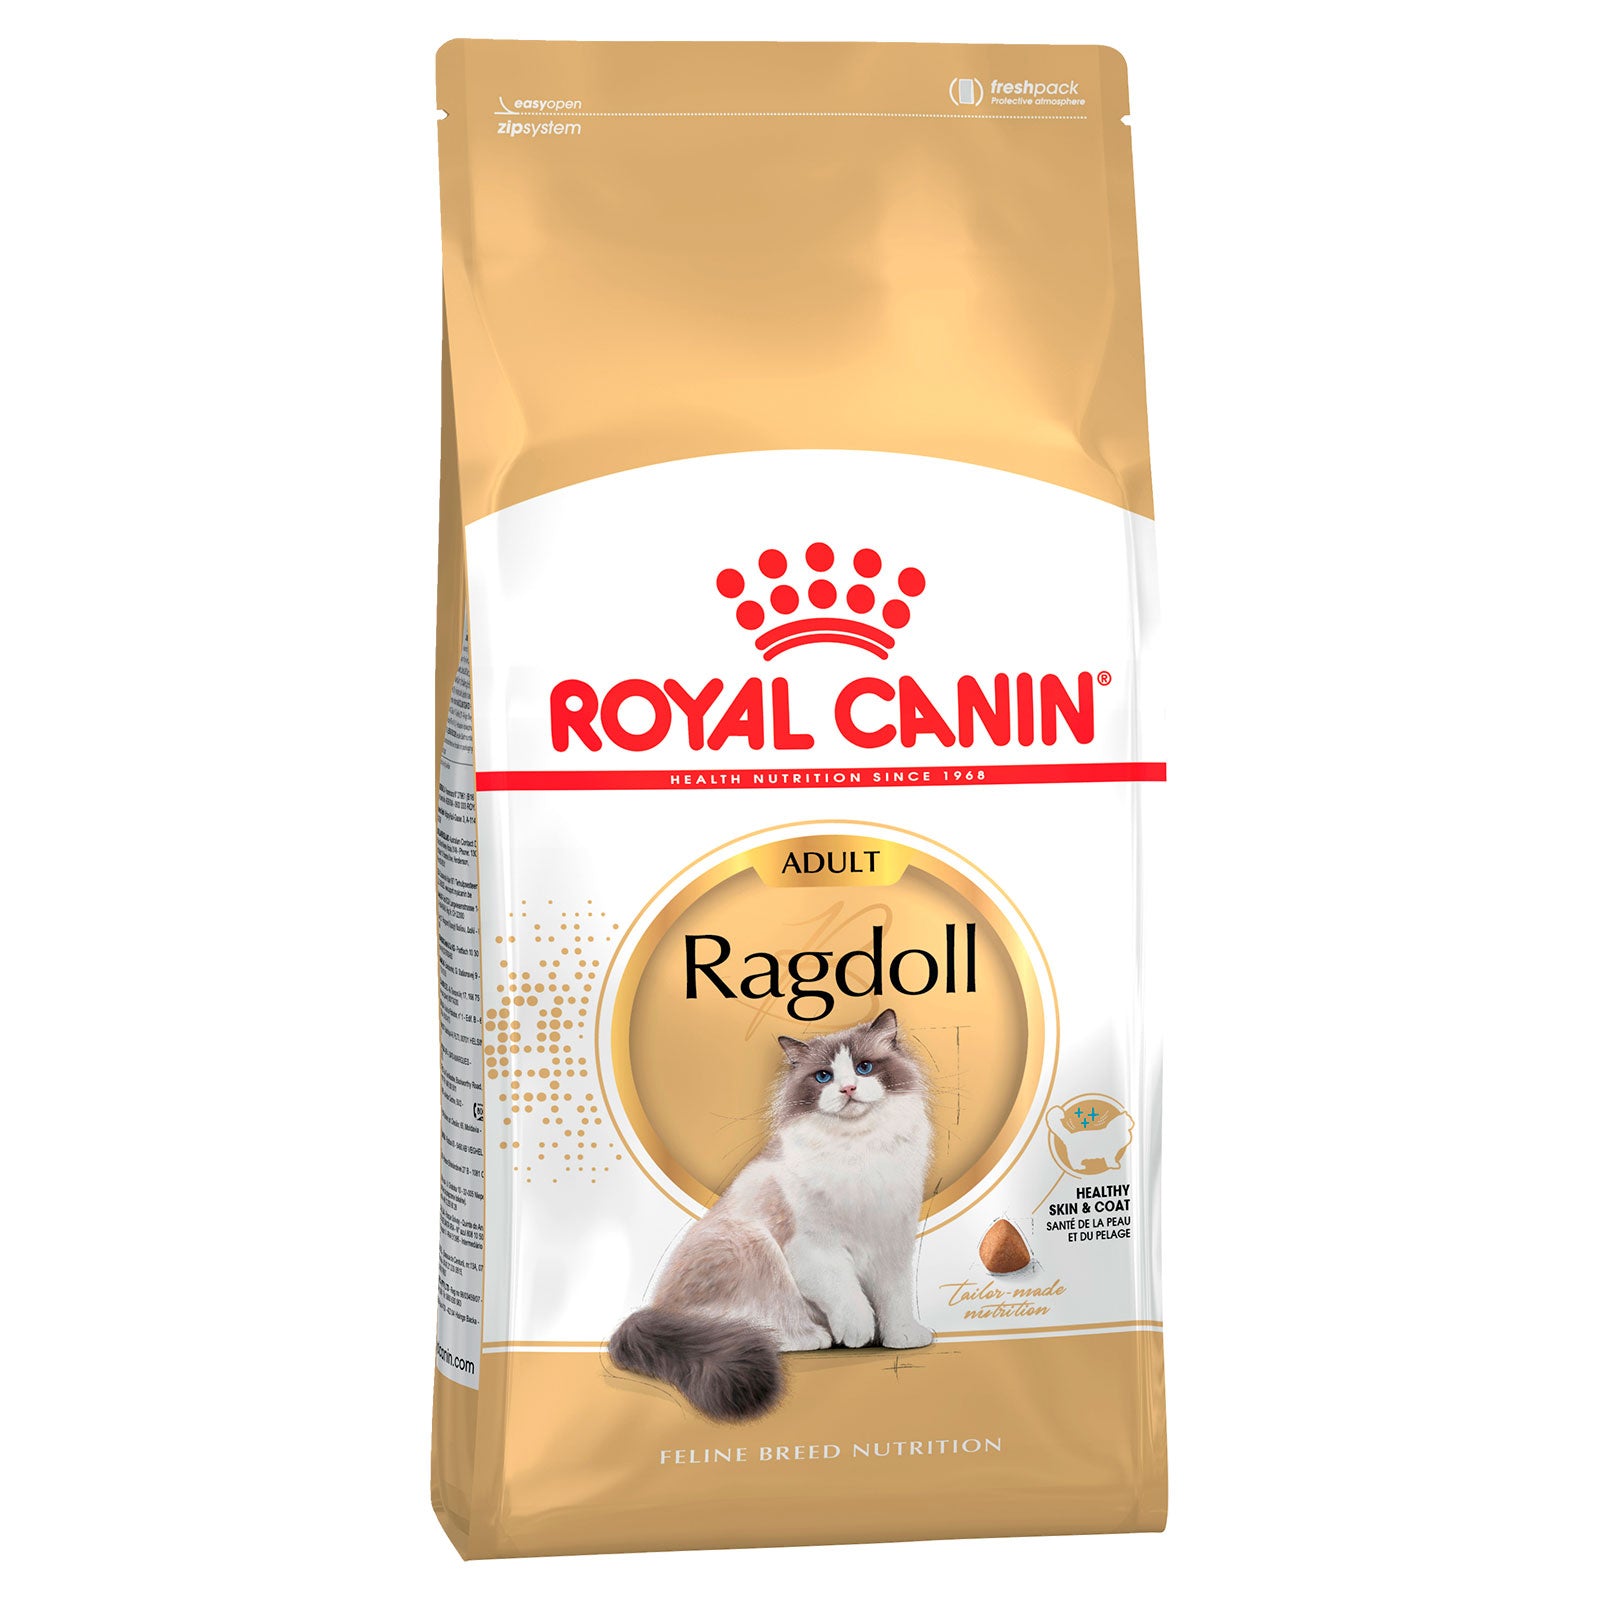 Royal Canin Cat Food Adult Ragdoll